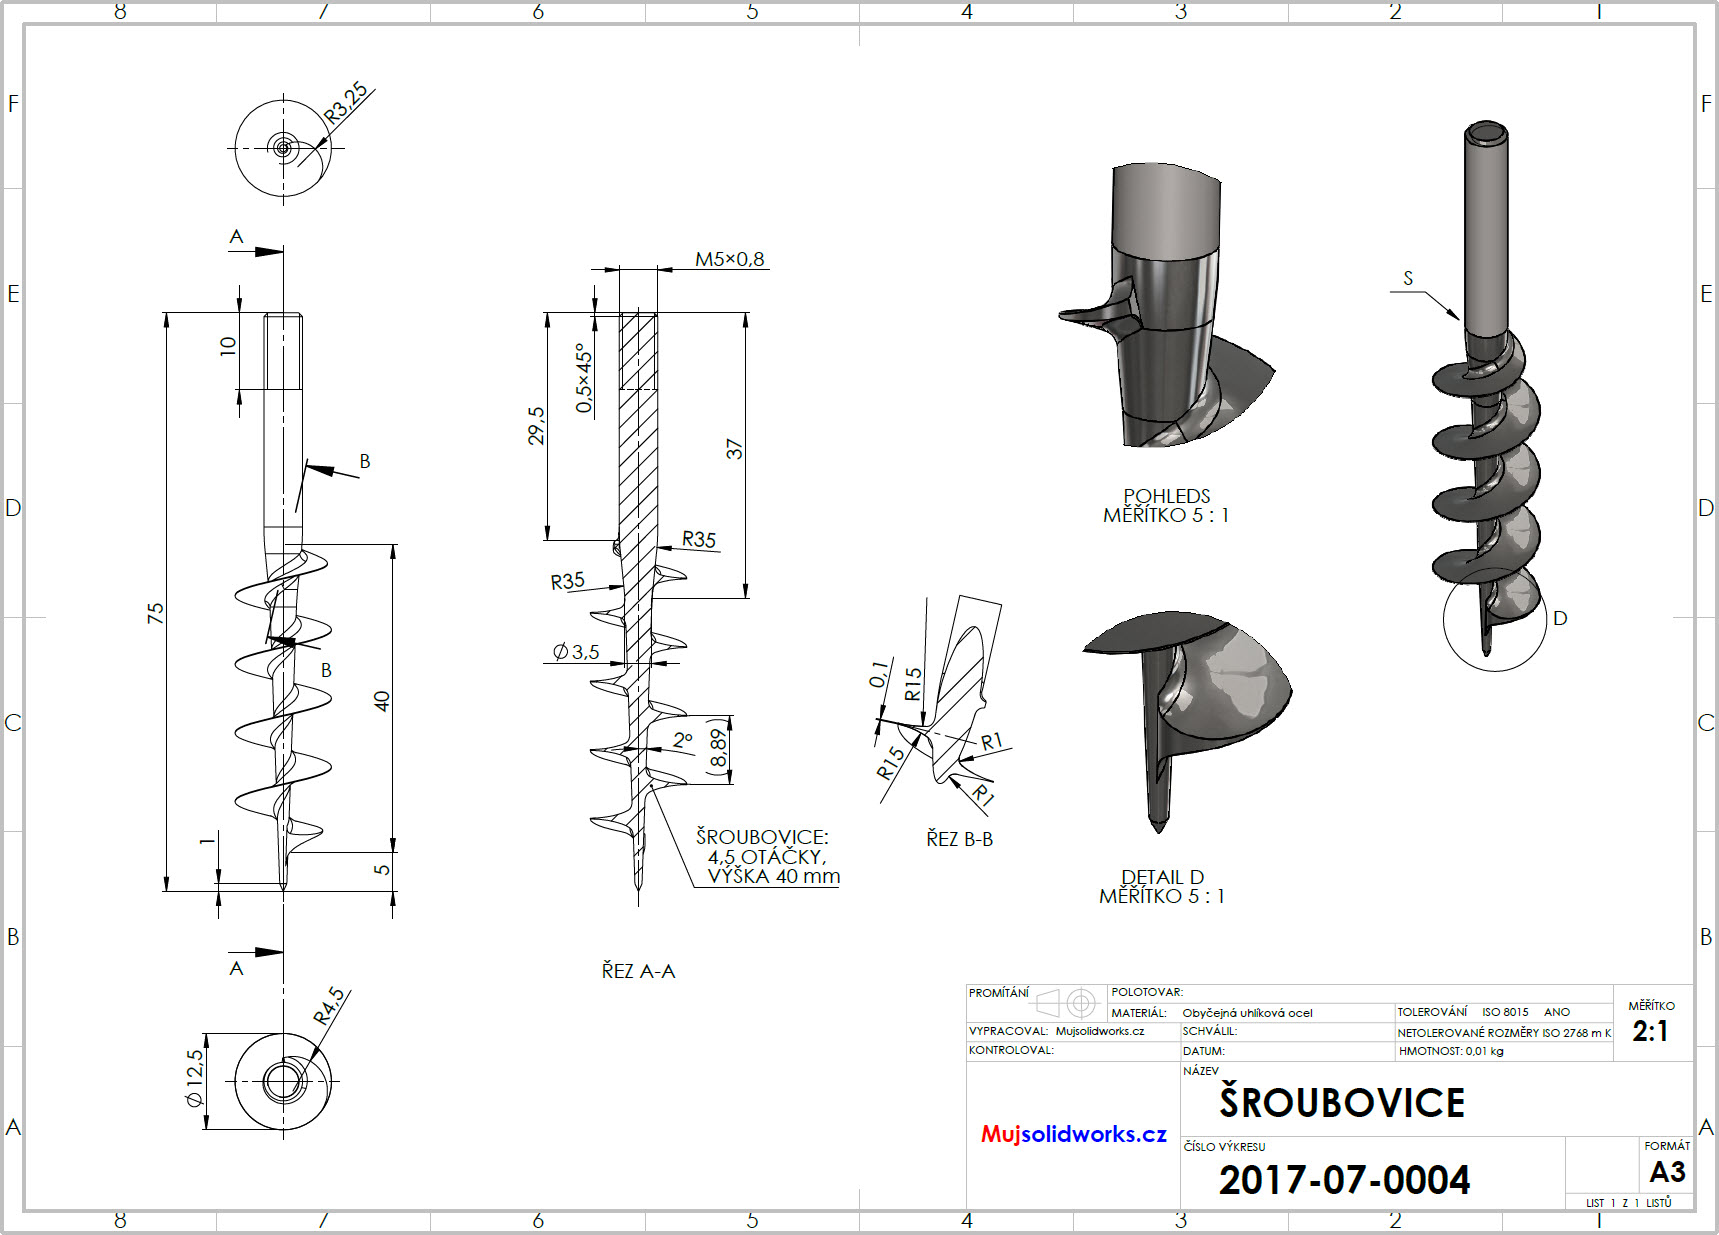 2-SolidWorks-vyvrtka-sroubovice-zadani-drawing-corkscrew